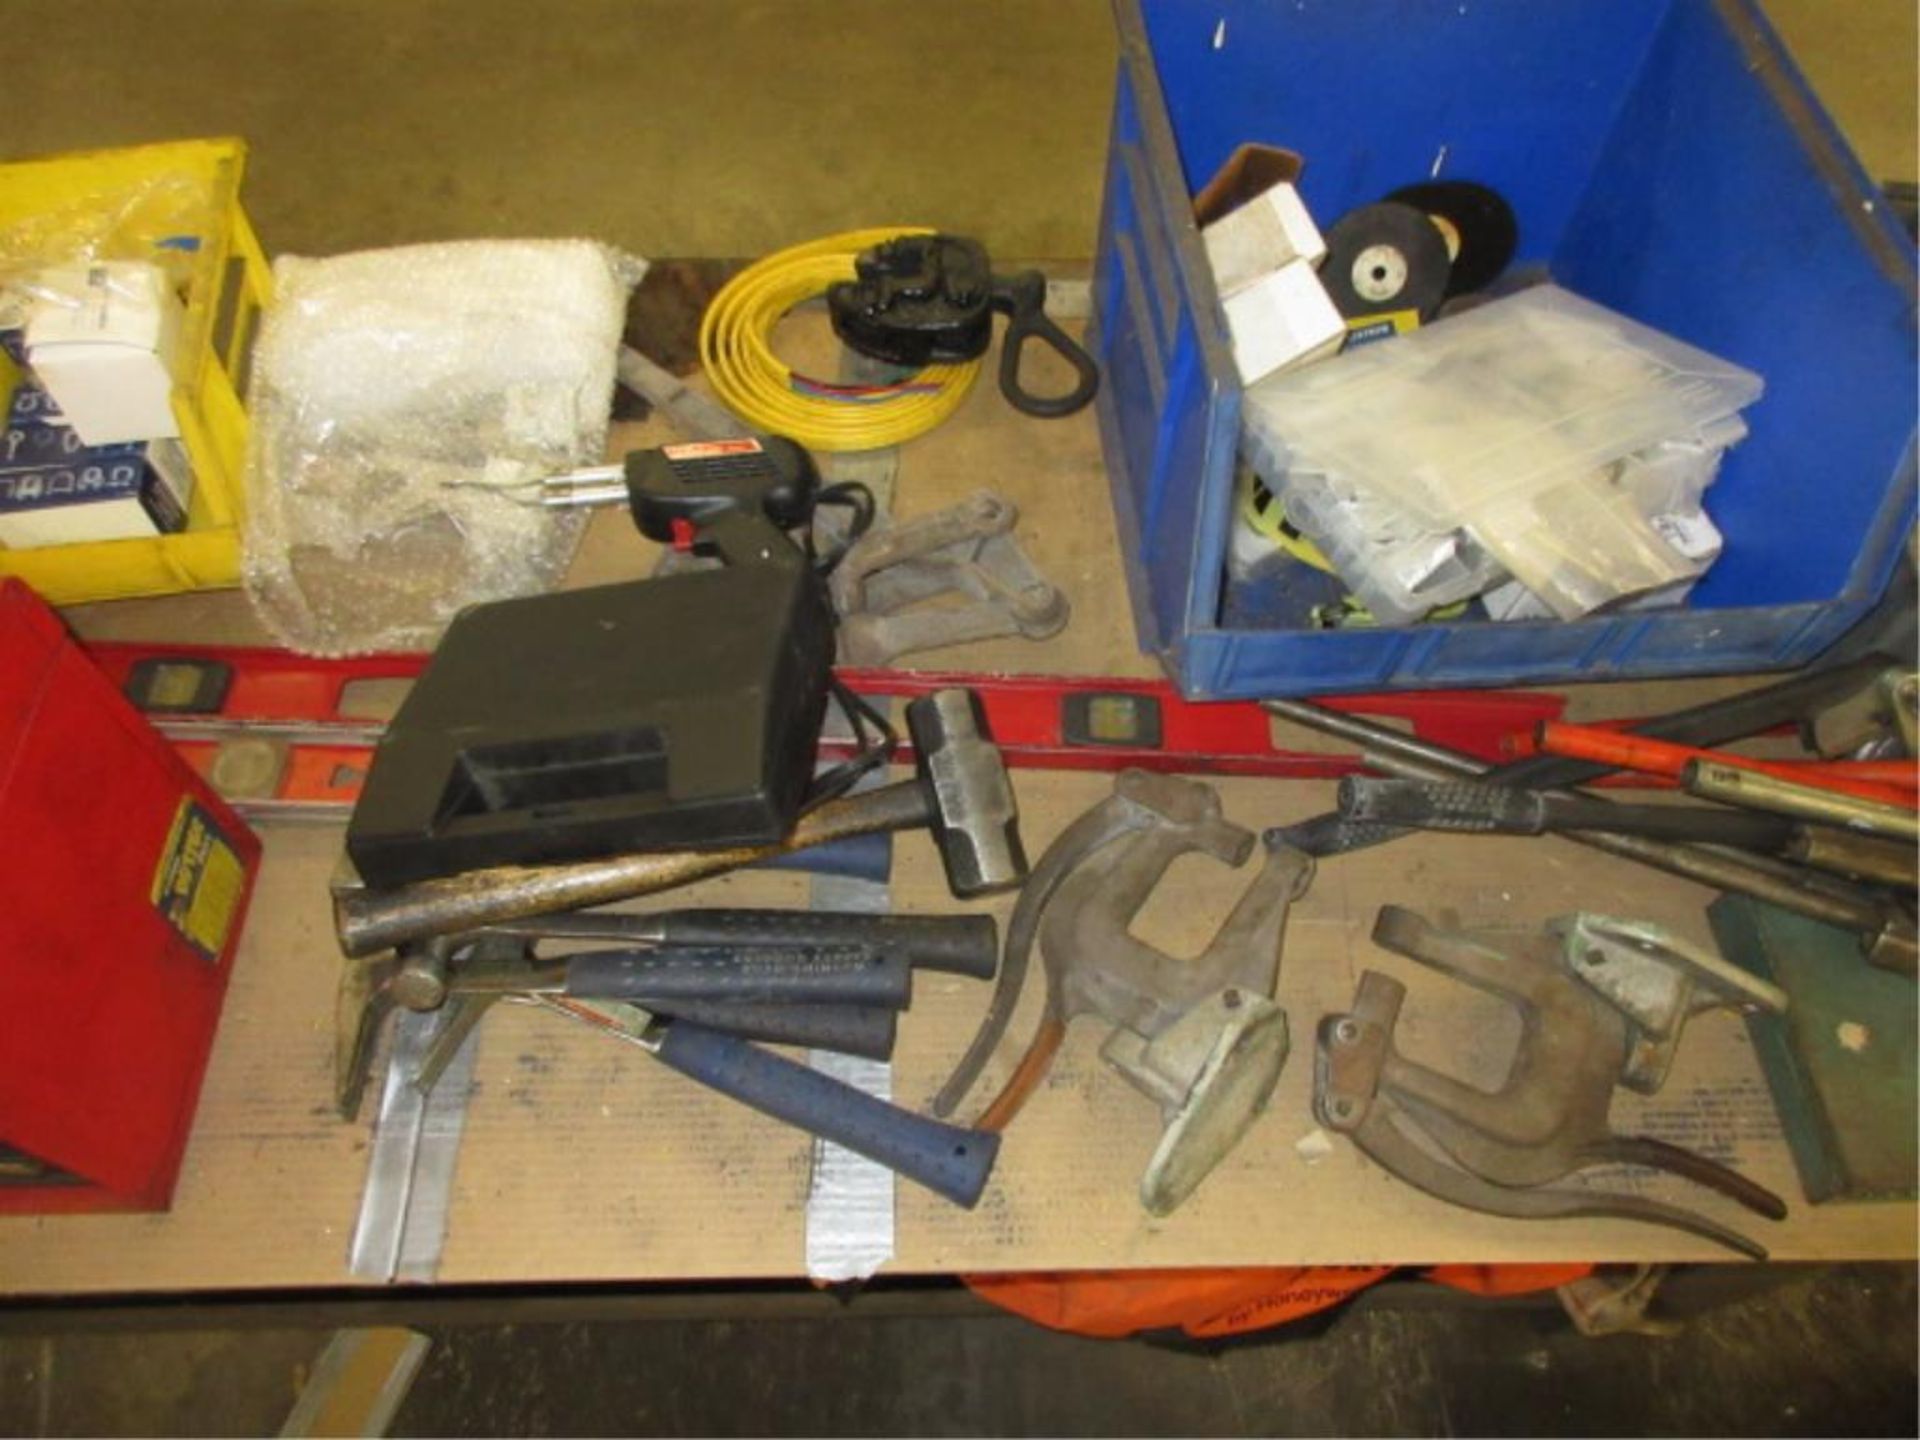 Shop Tools. Lot Assorted Shop Tools, includes tool box, hammers, mallets, solder guns, bottle jacks, - Image 3 of 8